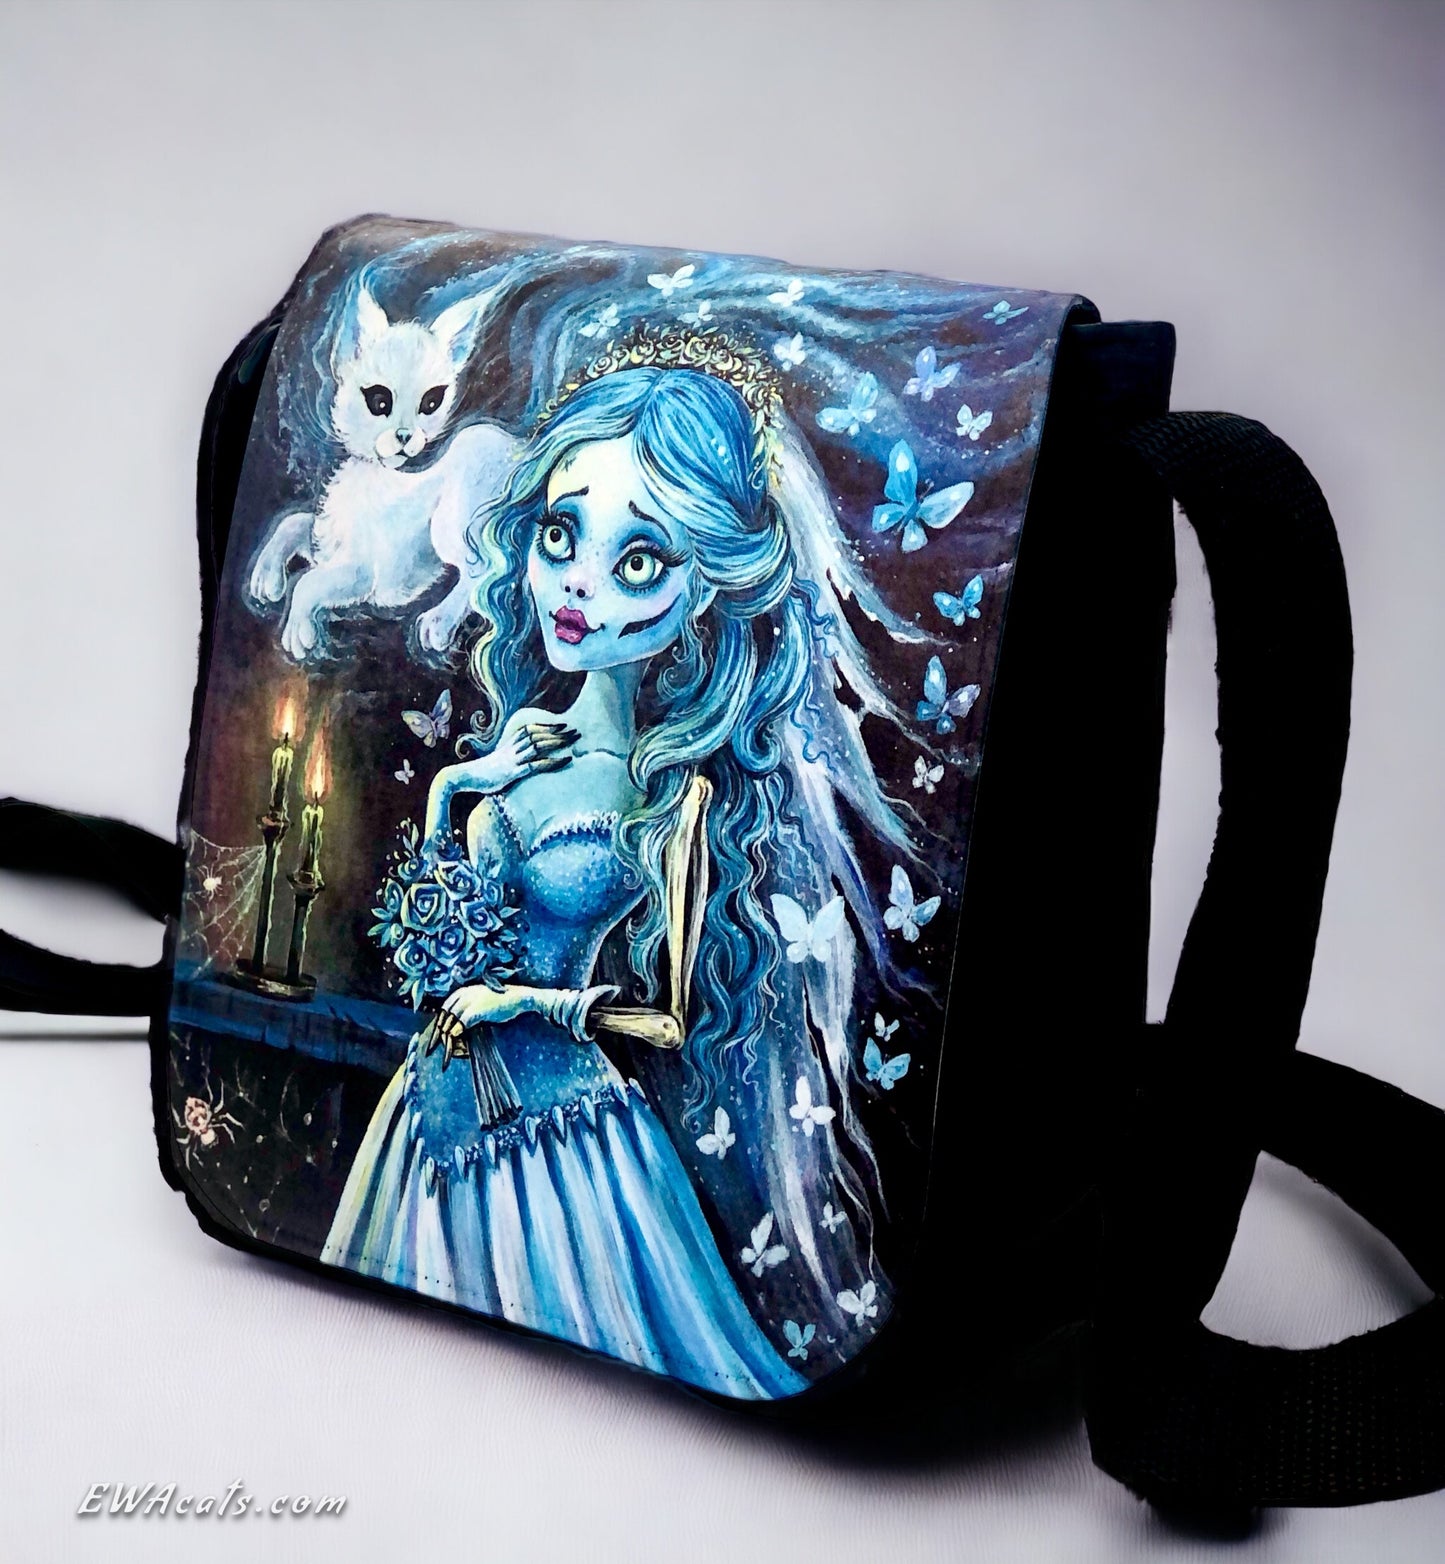 Shoulder Bag "Emily & Her Ghost Kitty"